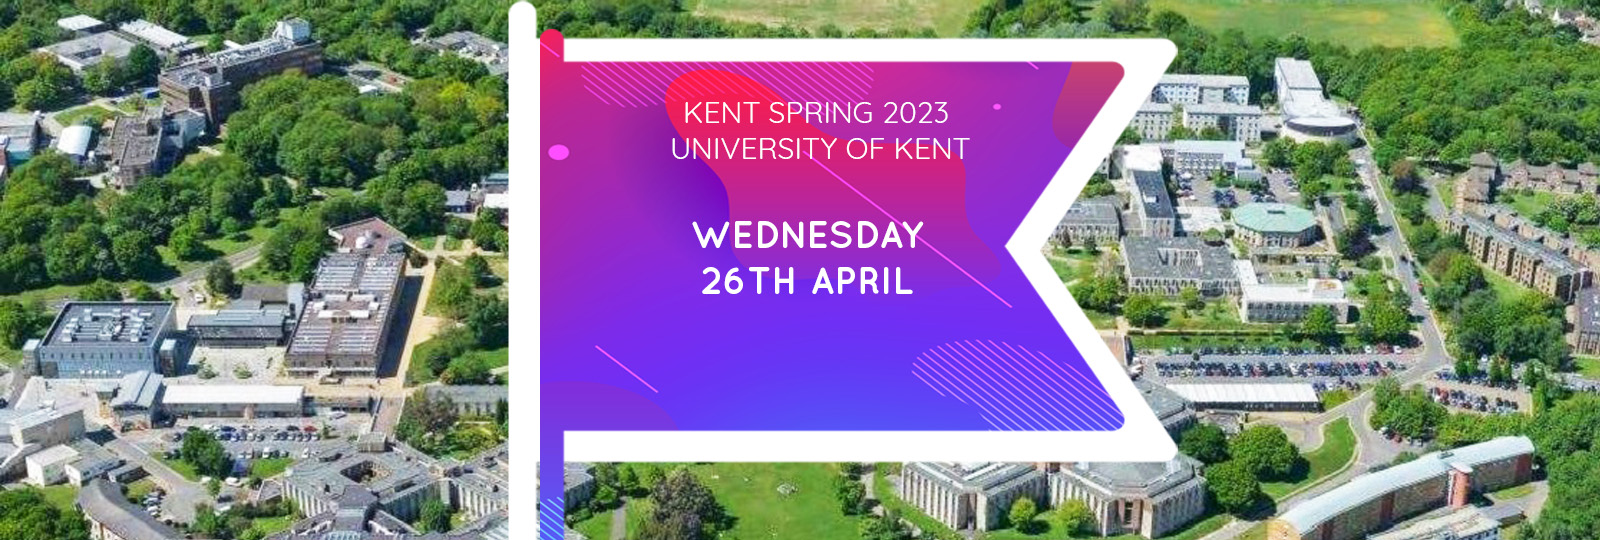 University of Kent Spring 2023 Fair